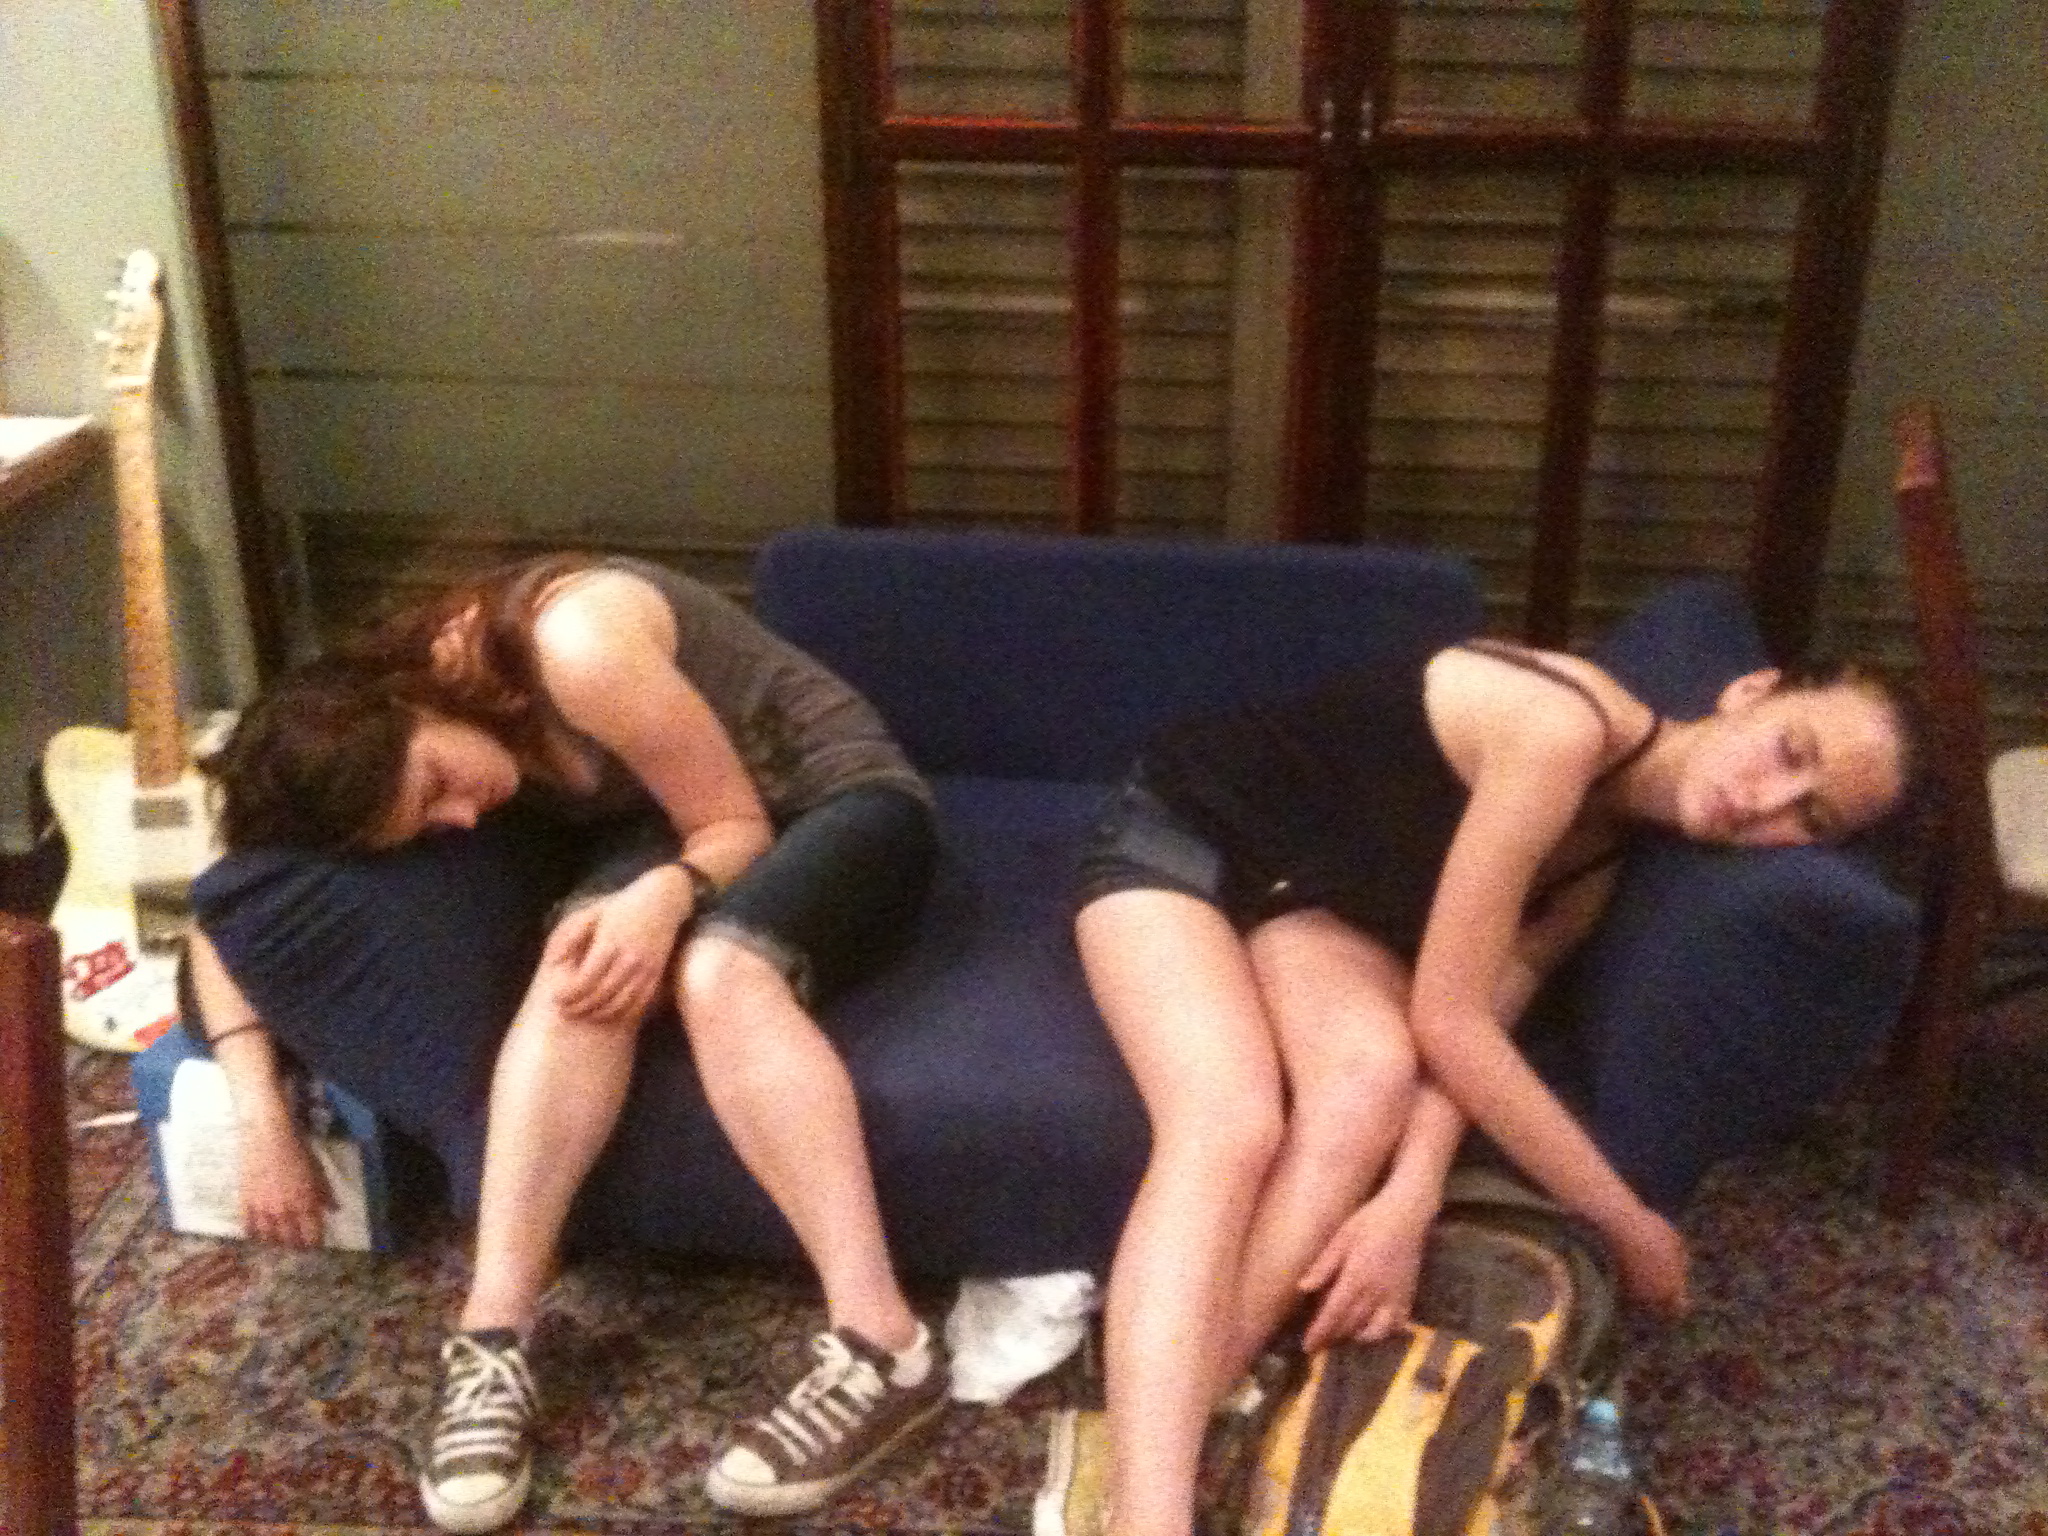 Kozmoz Internship participants catching a nap during their crazy schedule